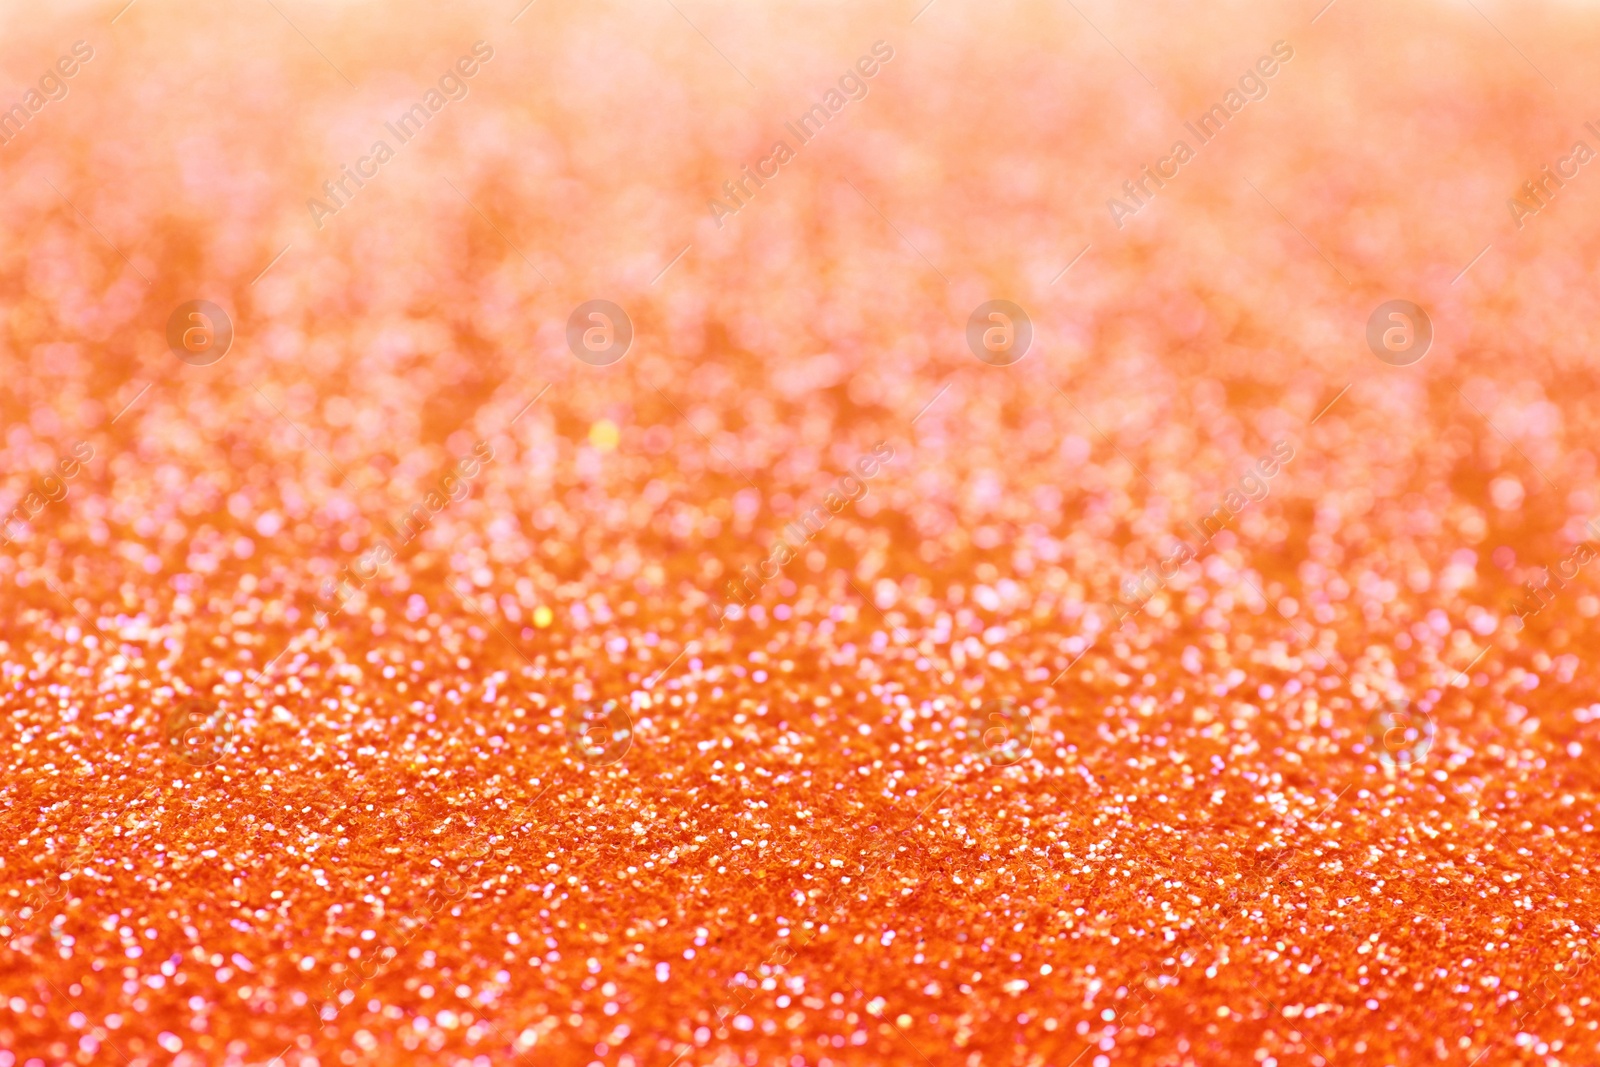 Photo of Shiny orange glitter as background. Bokeh effect